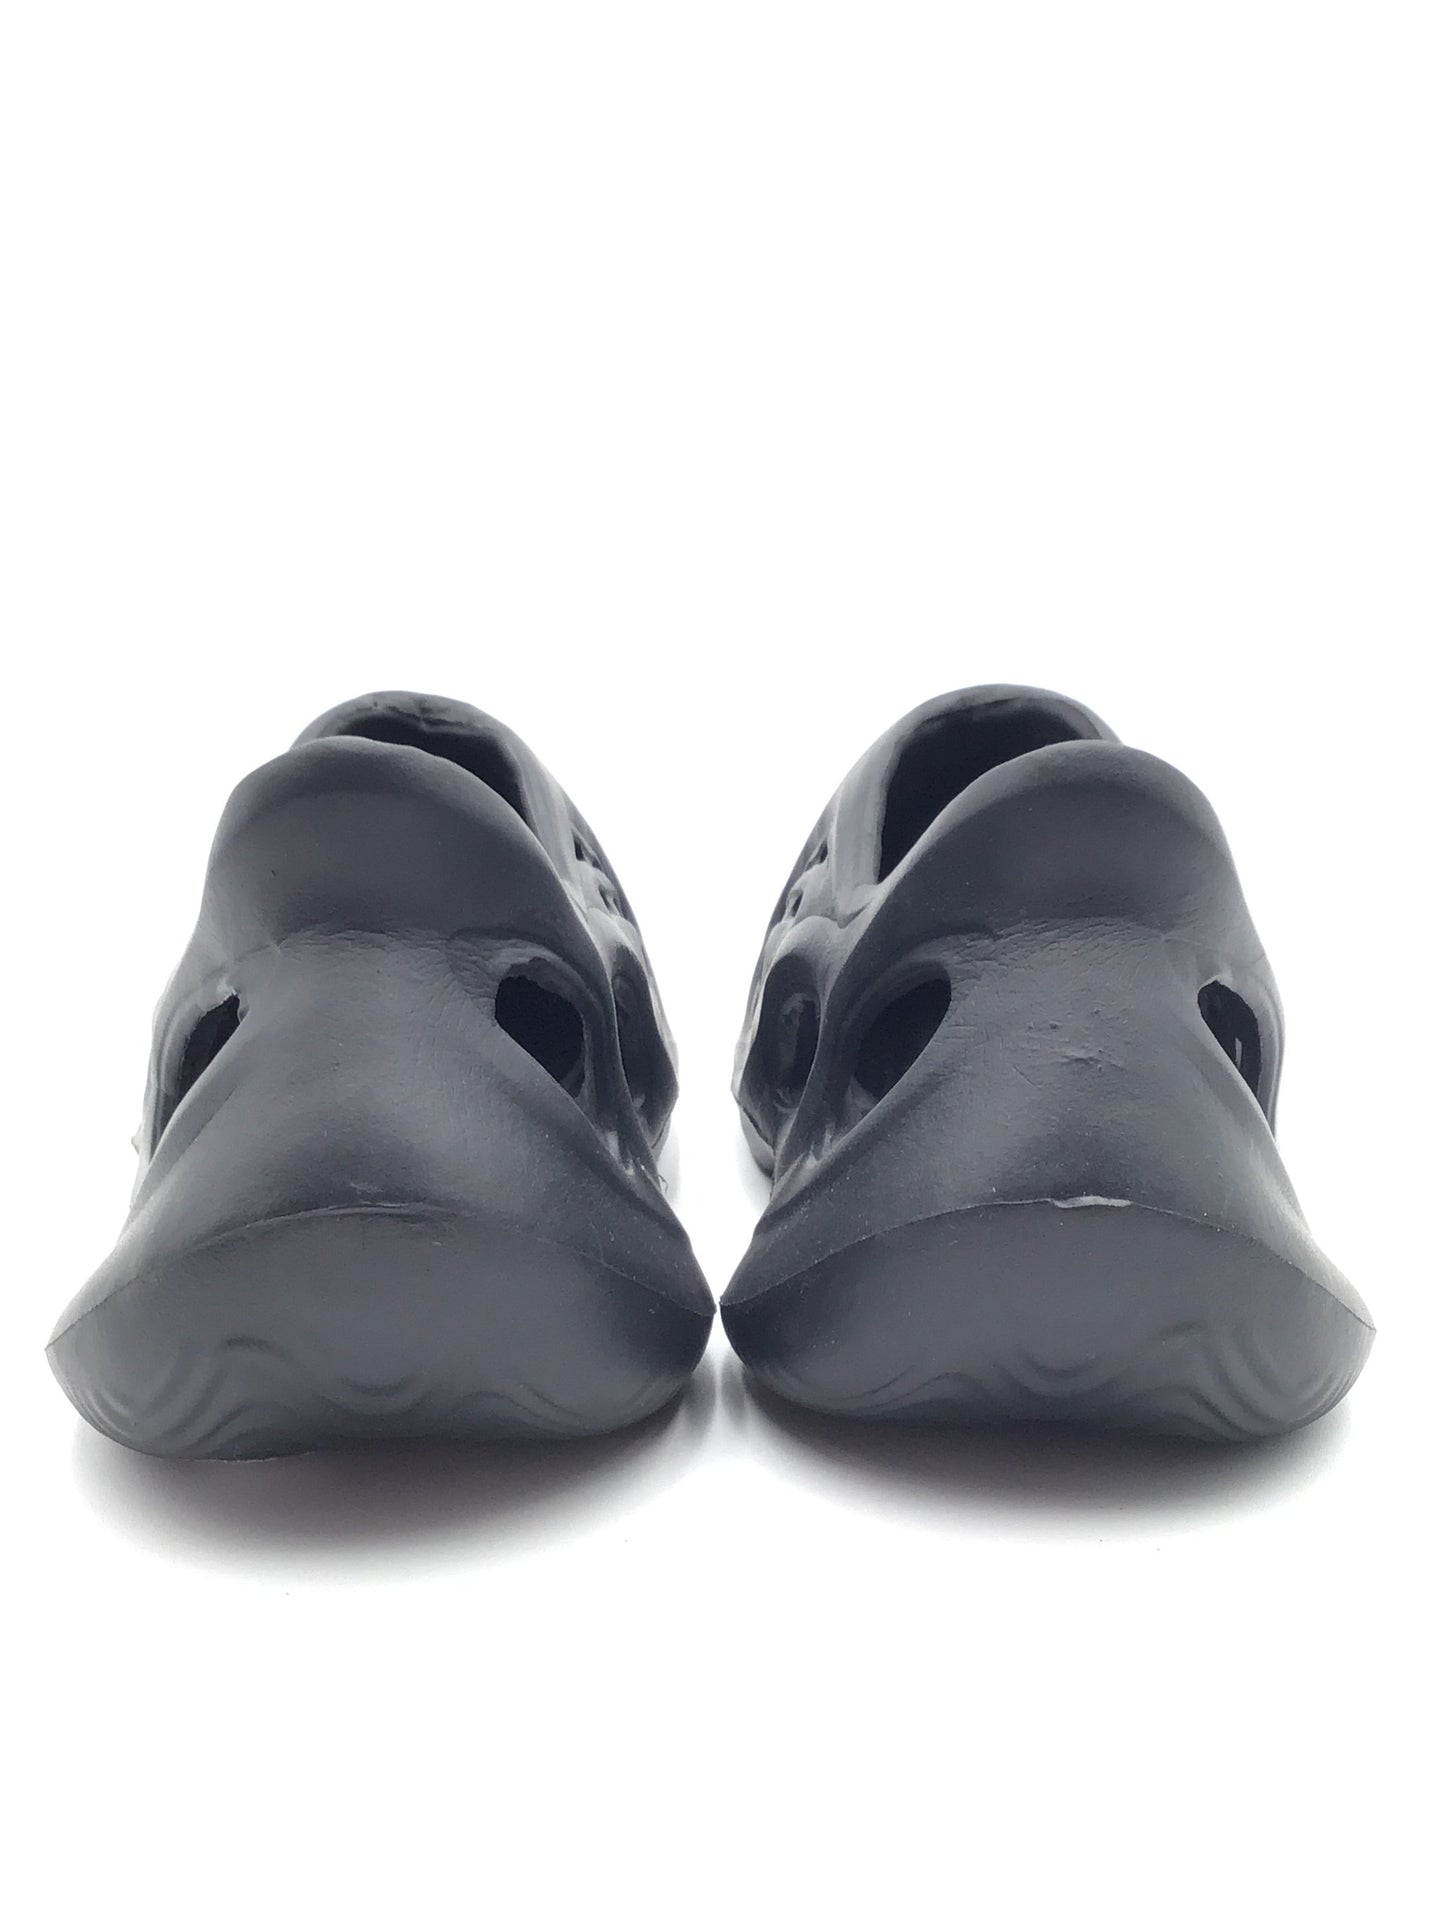 Black Shoes Flats Clothes Mentor, Size 7